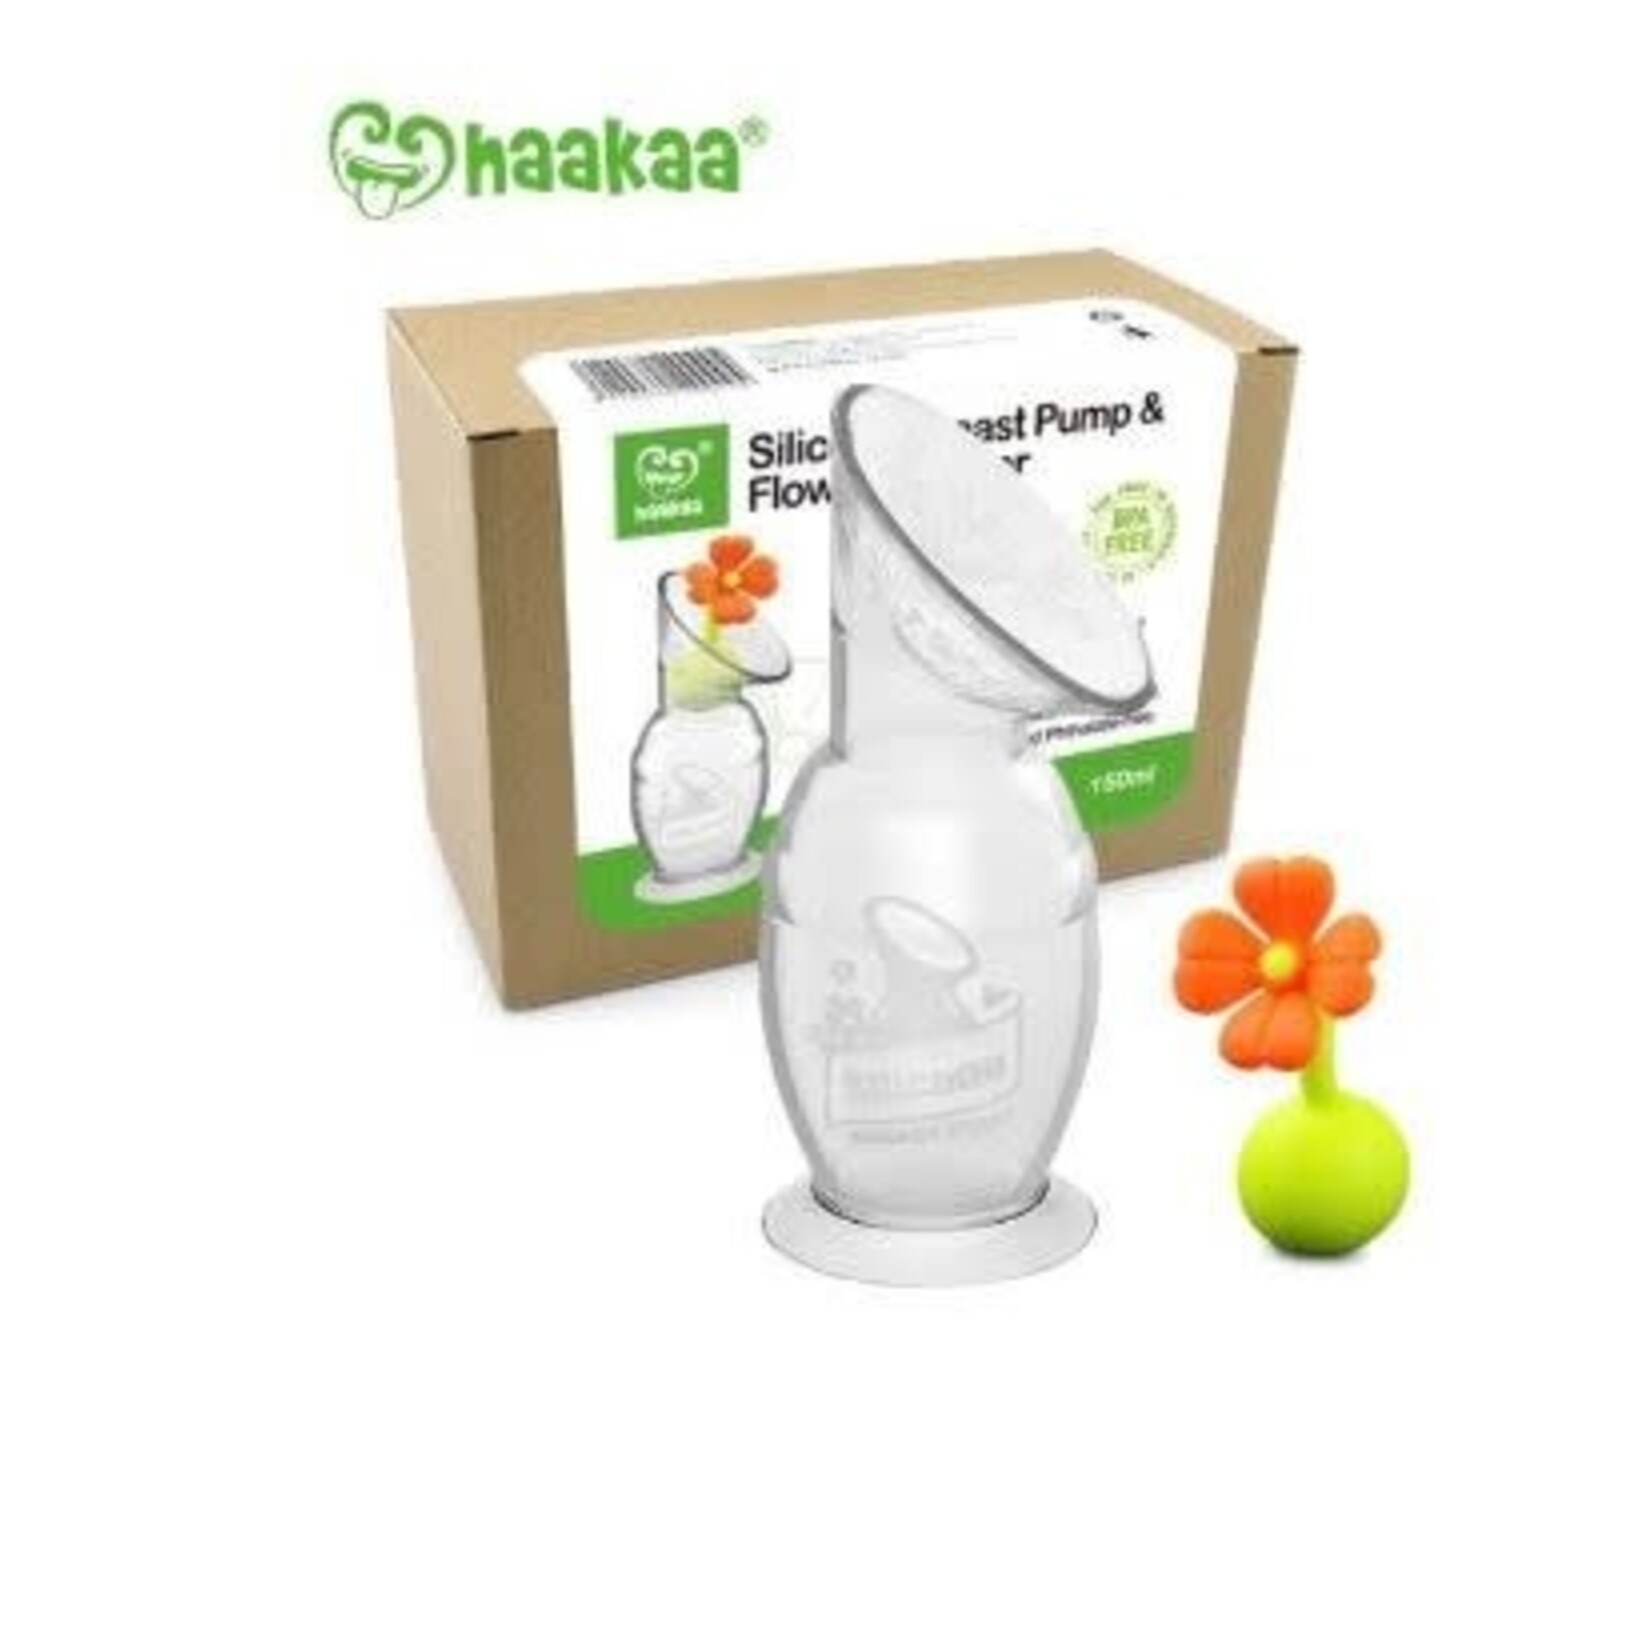 Haakaa Generation 2 150ml Pump and Stopper Gift Box Orange